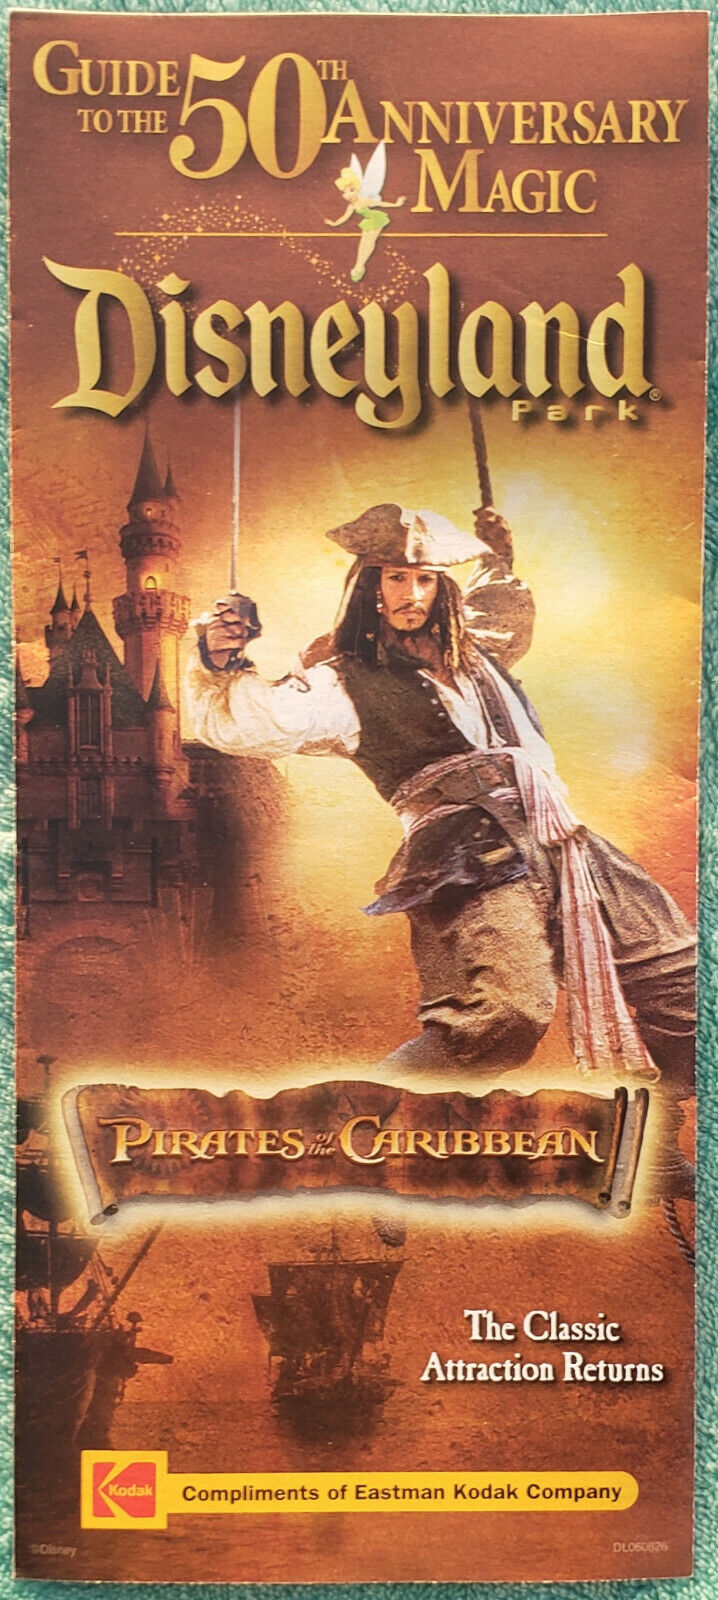 2006 Disneyland Fold Out Guidemap 50th Anniversary Celebration - Pirates Returns